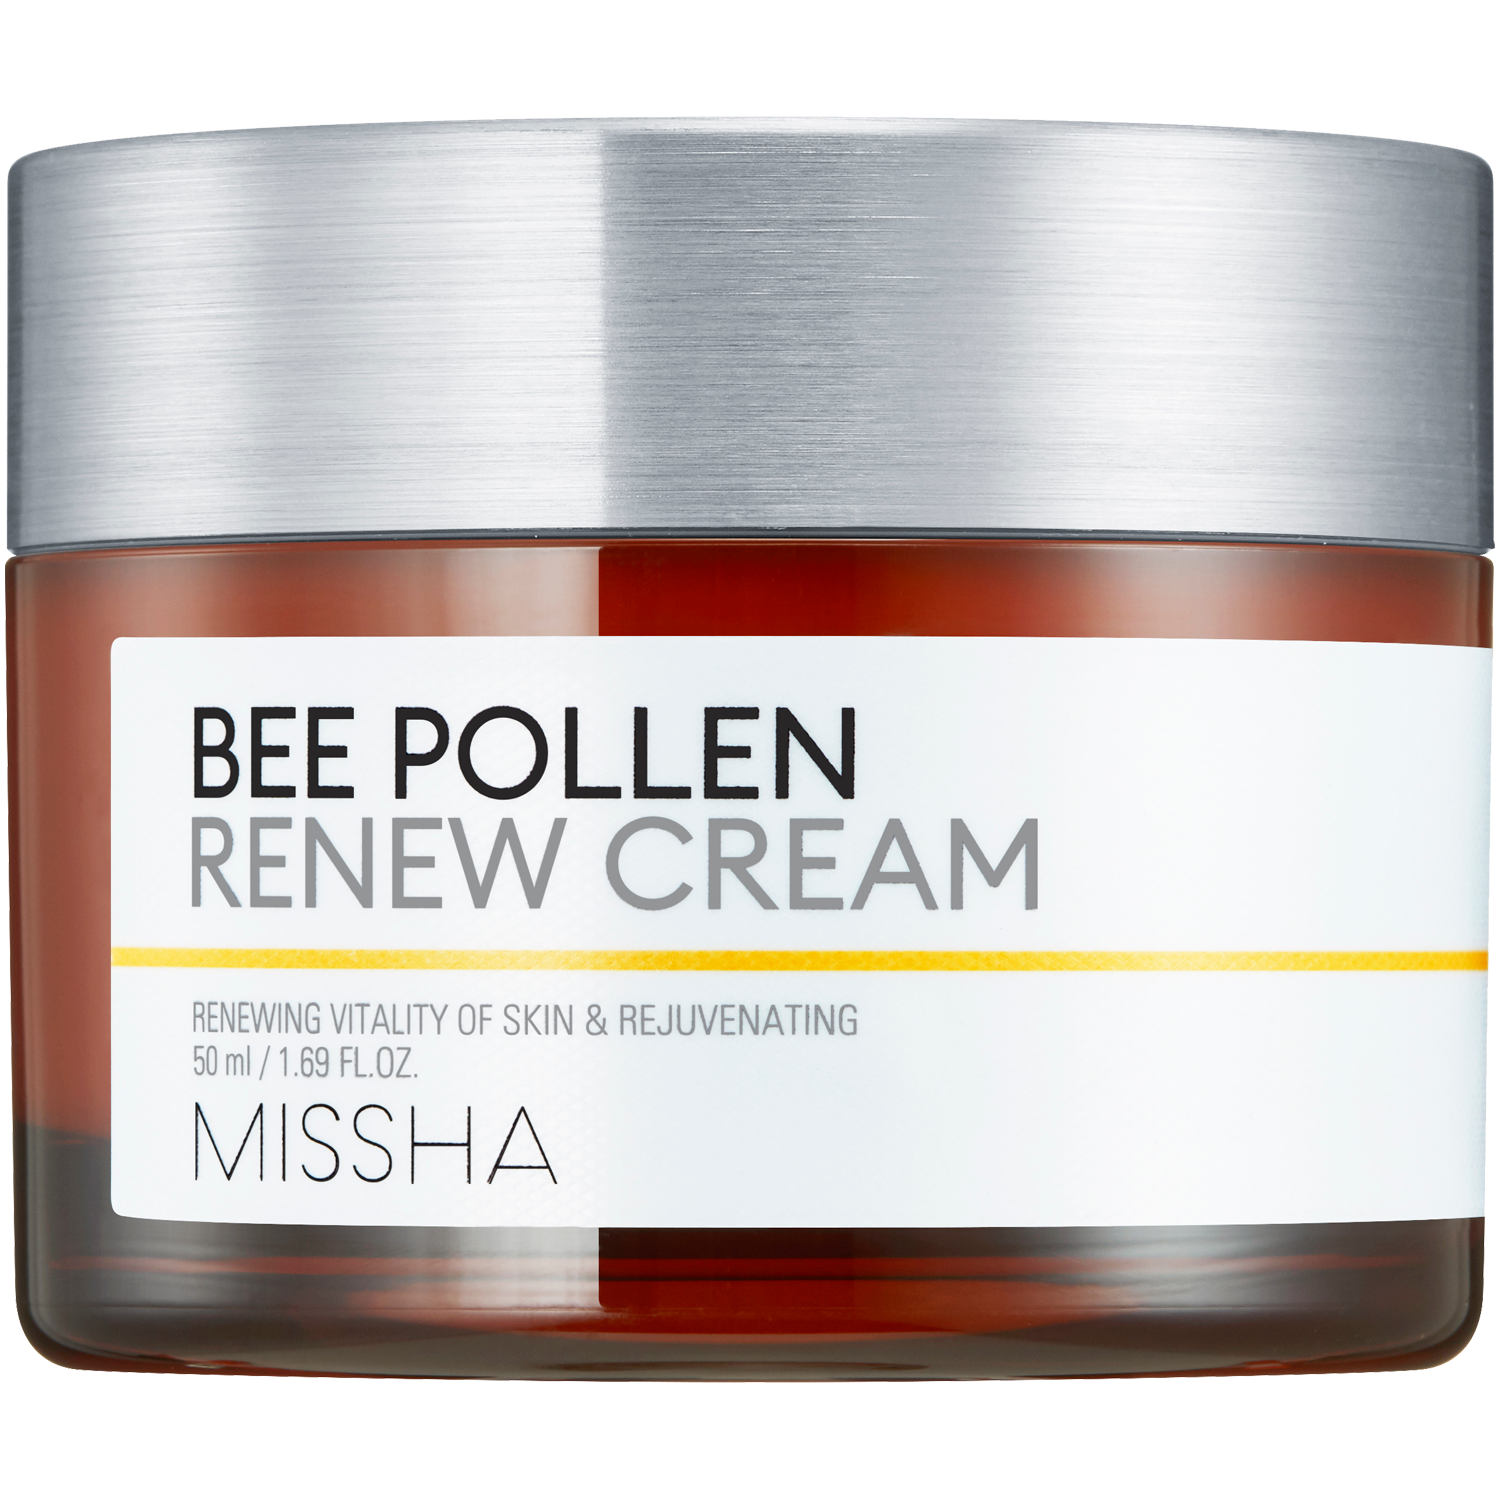 Missha Bee Pollen Renew крем для лица, 50 мл цена и фото